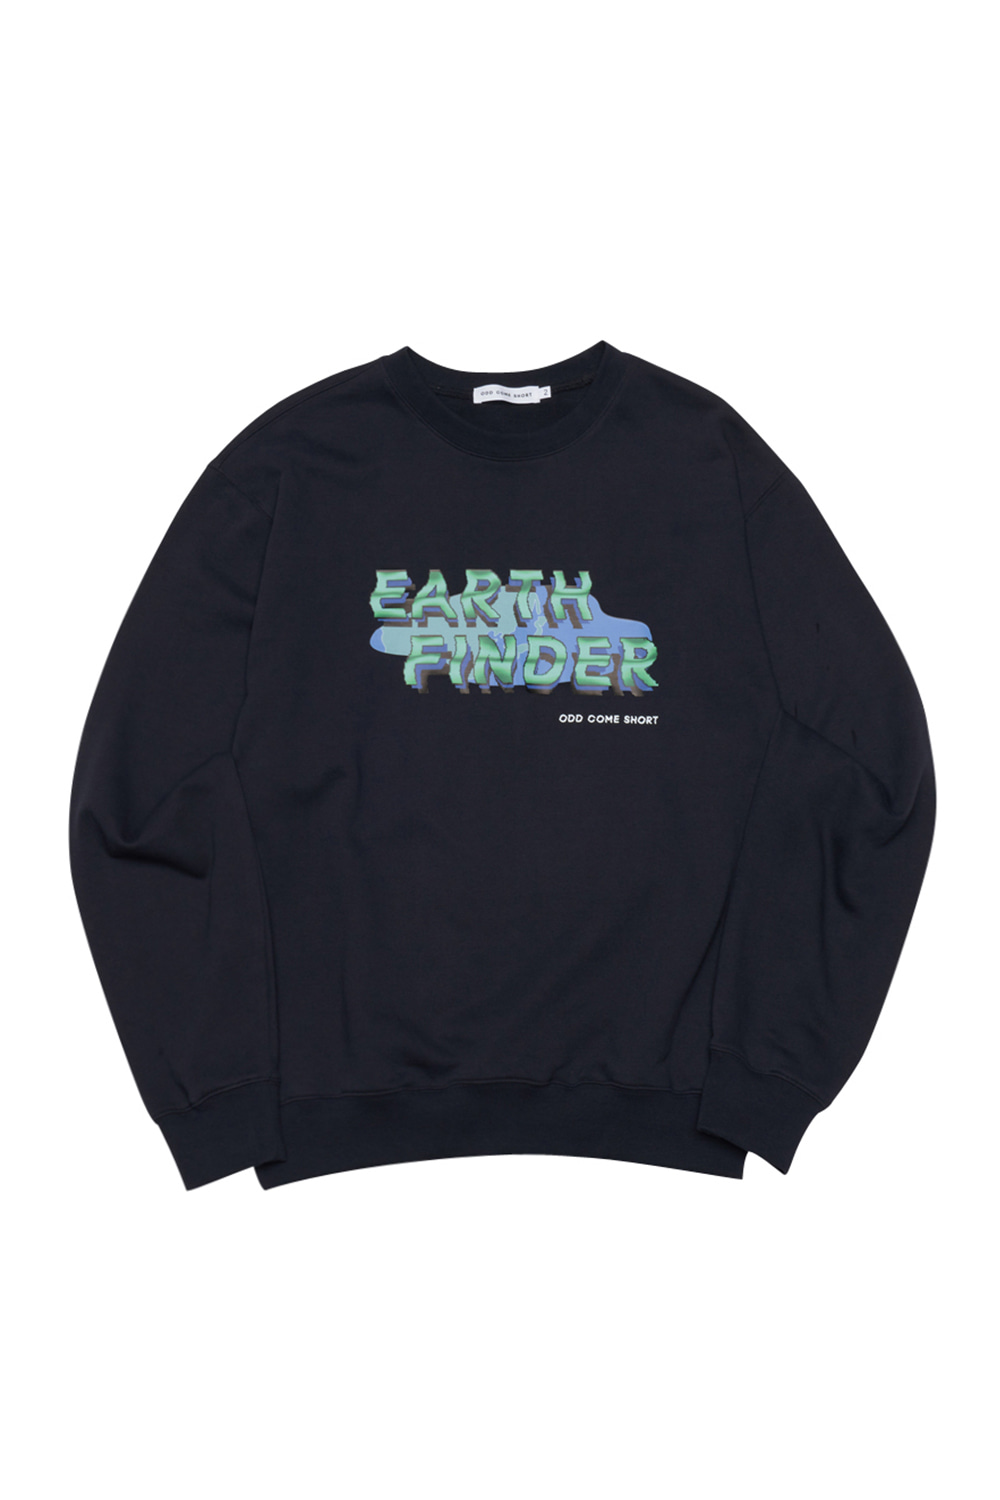 Earth finder sweatshirt_Charcoal